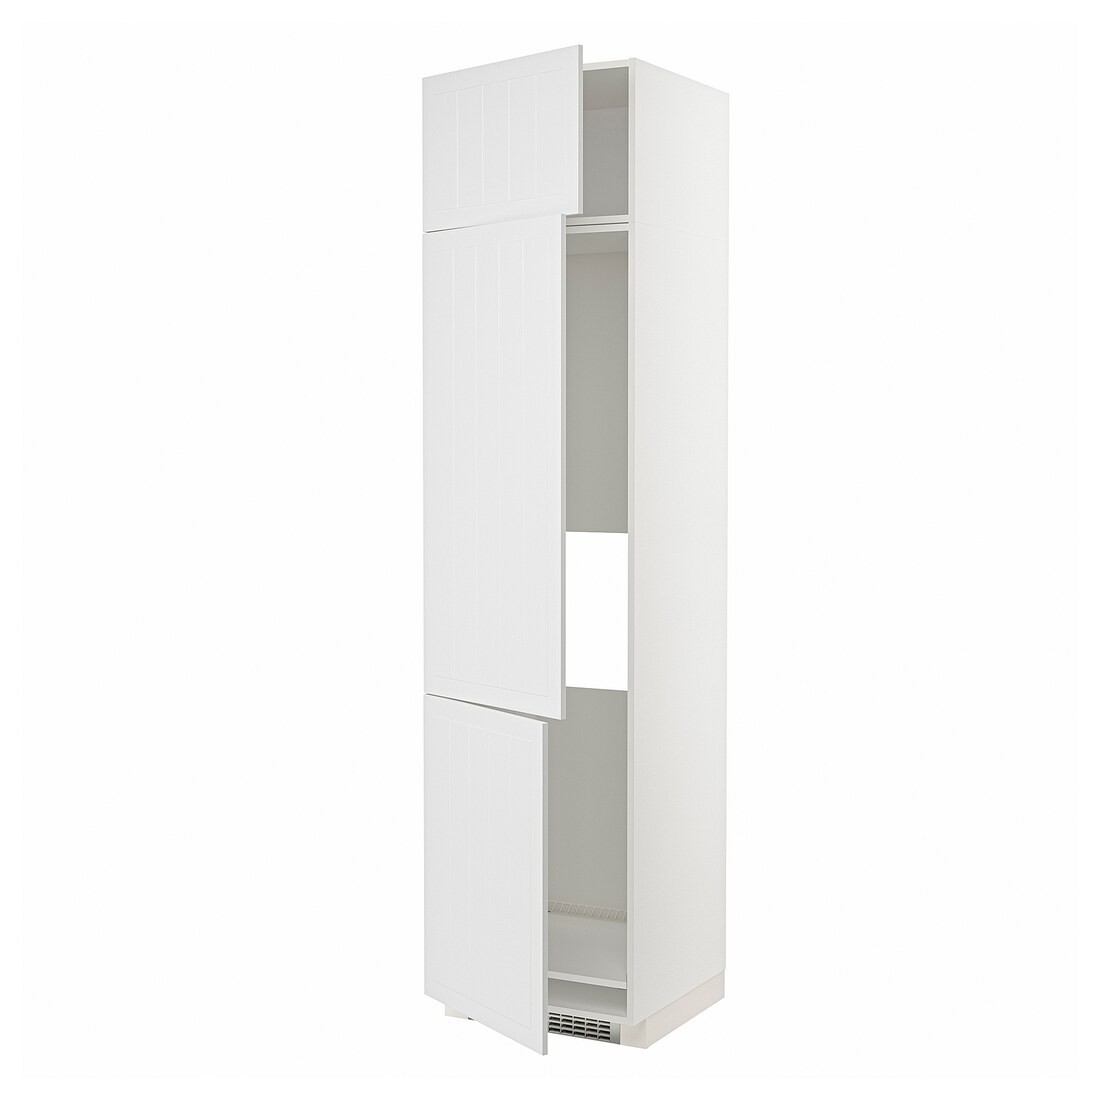 METOD МЕТОД Высокий шкаф для холодильника / морозильника / 3 дверцы, белый / Stensund белый, 60x60x240 см